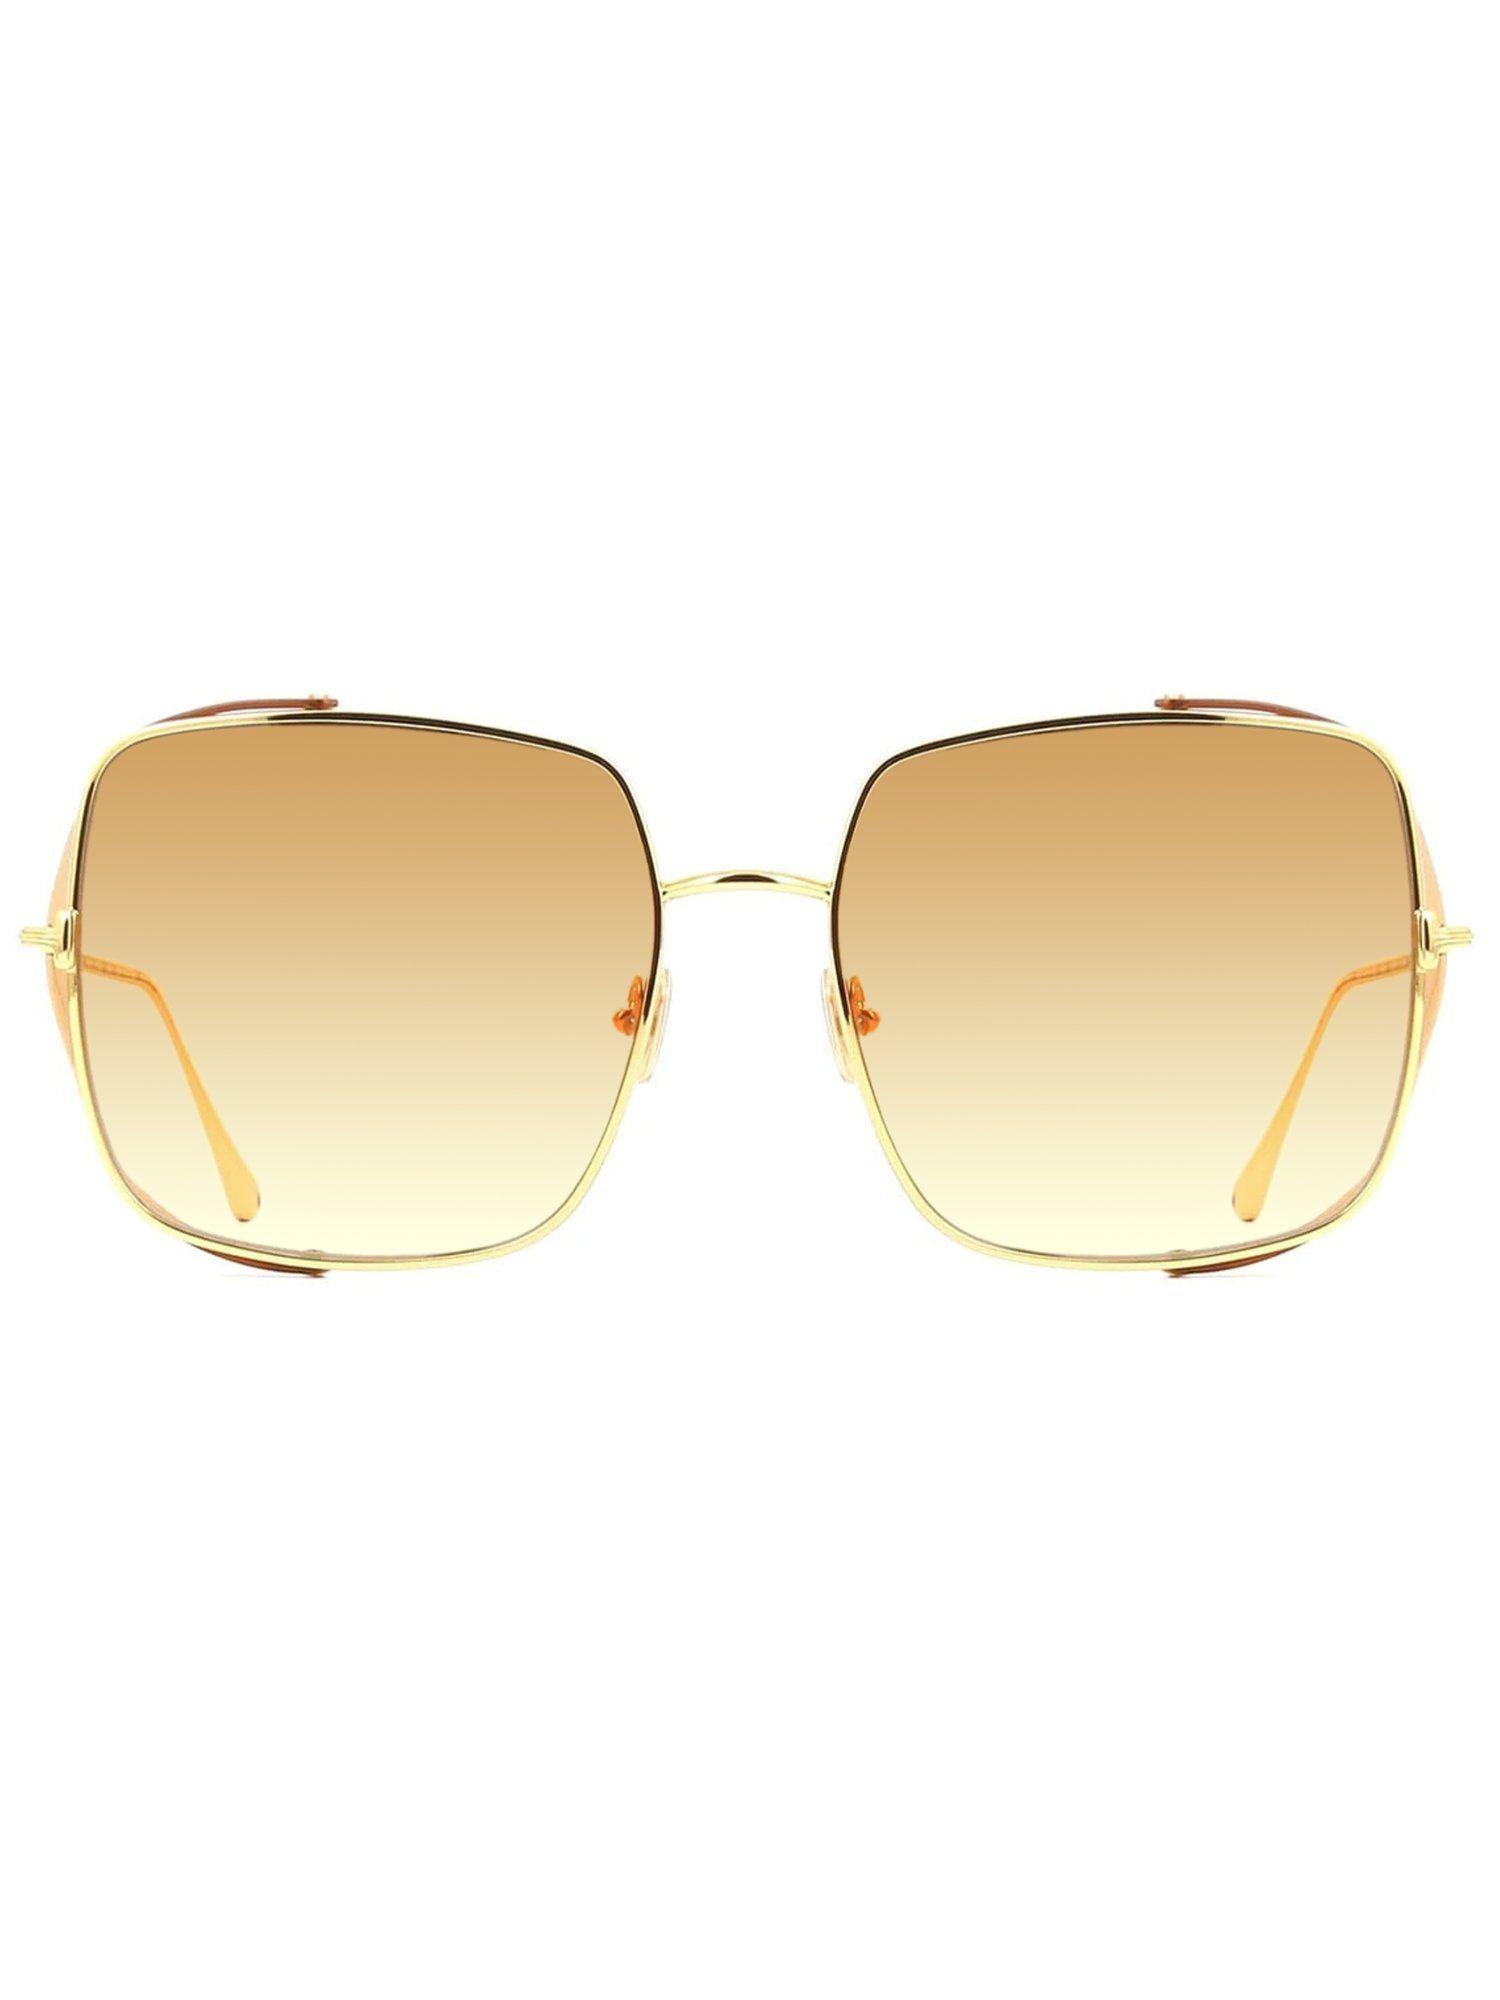 tom ford ft090160 bevelled uv protected sunglasses for women brown (60)